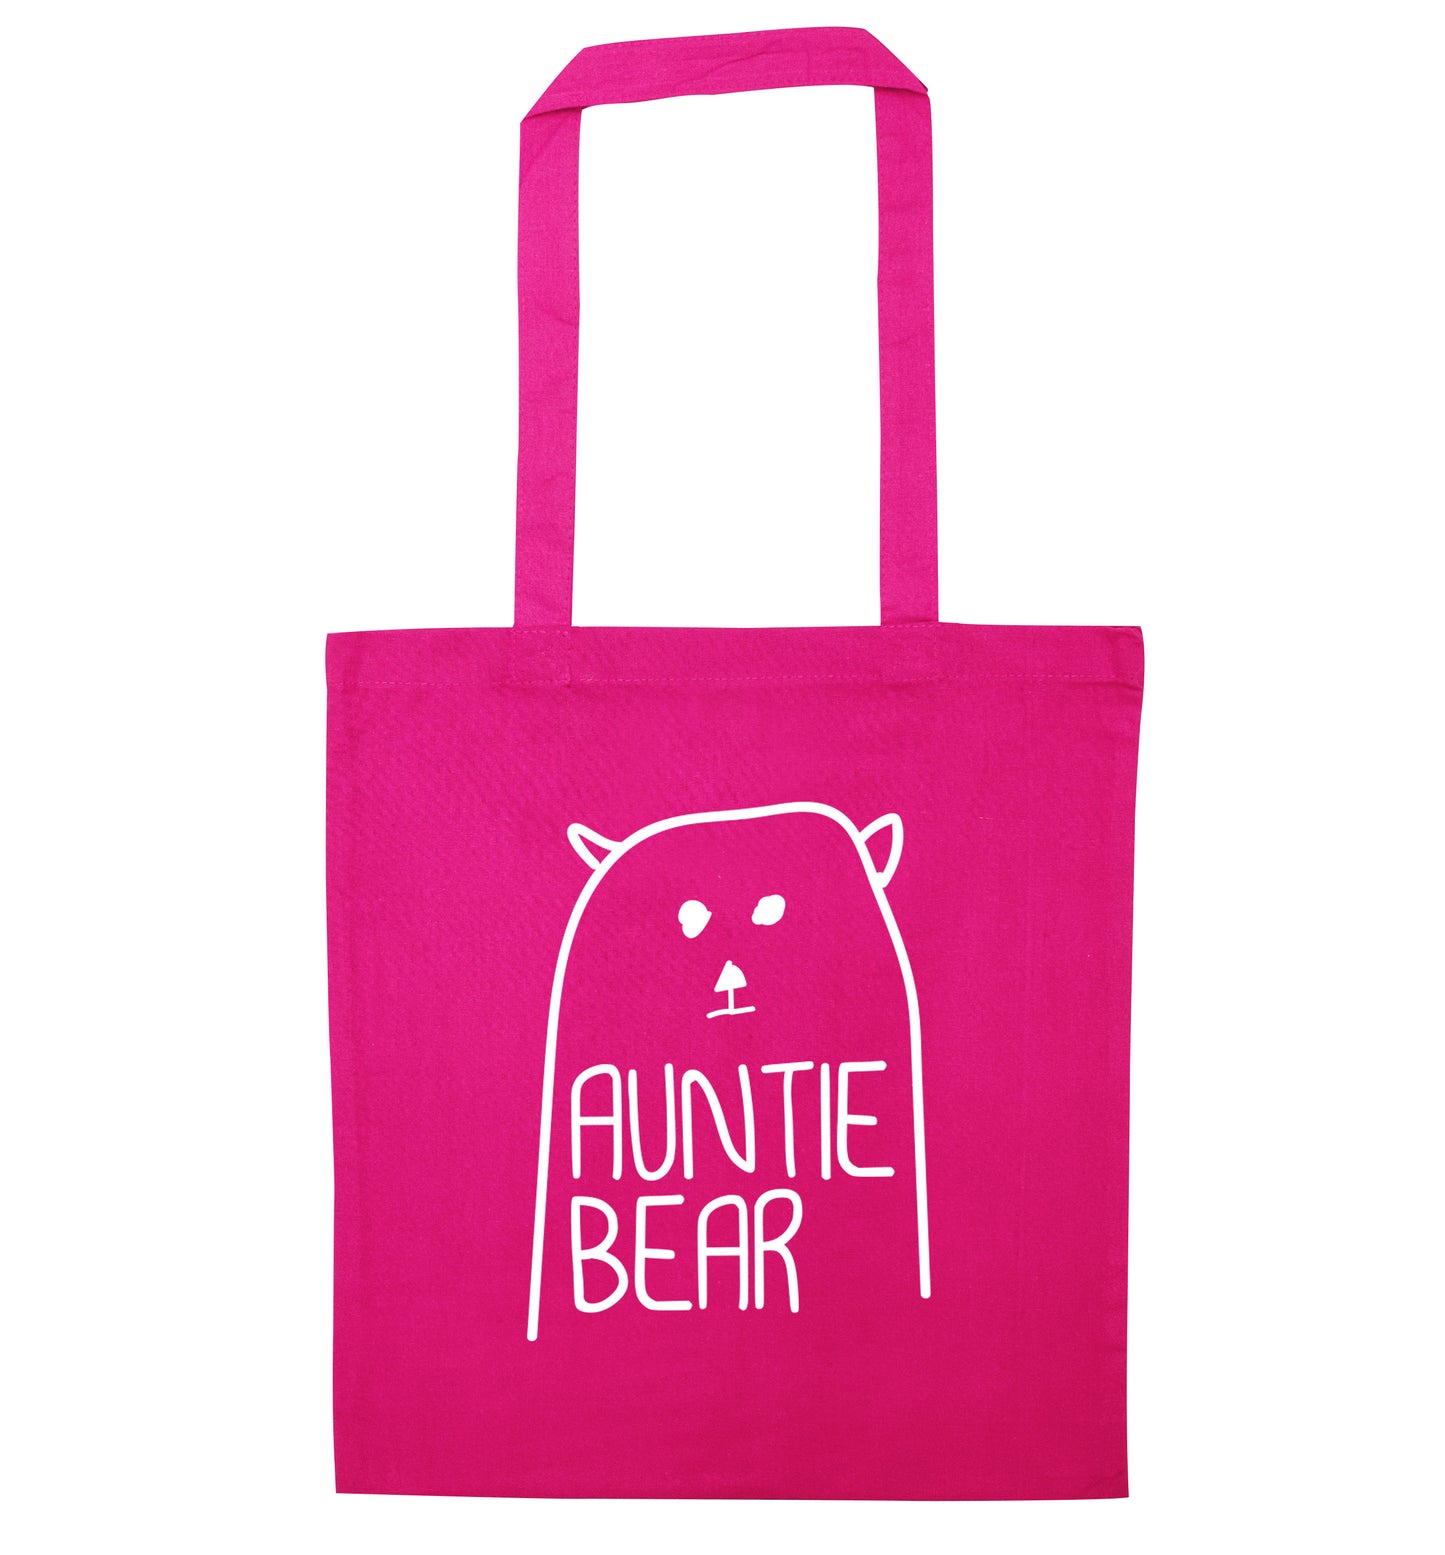 Auntie bear pink tote bag